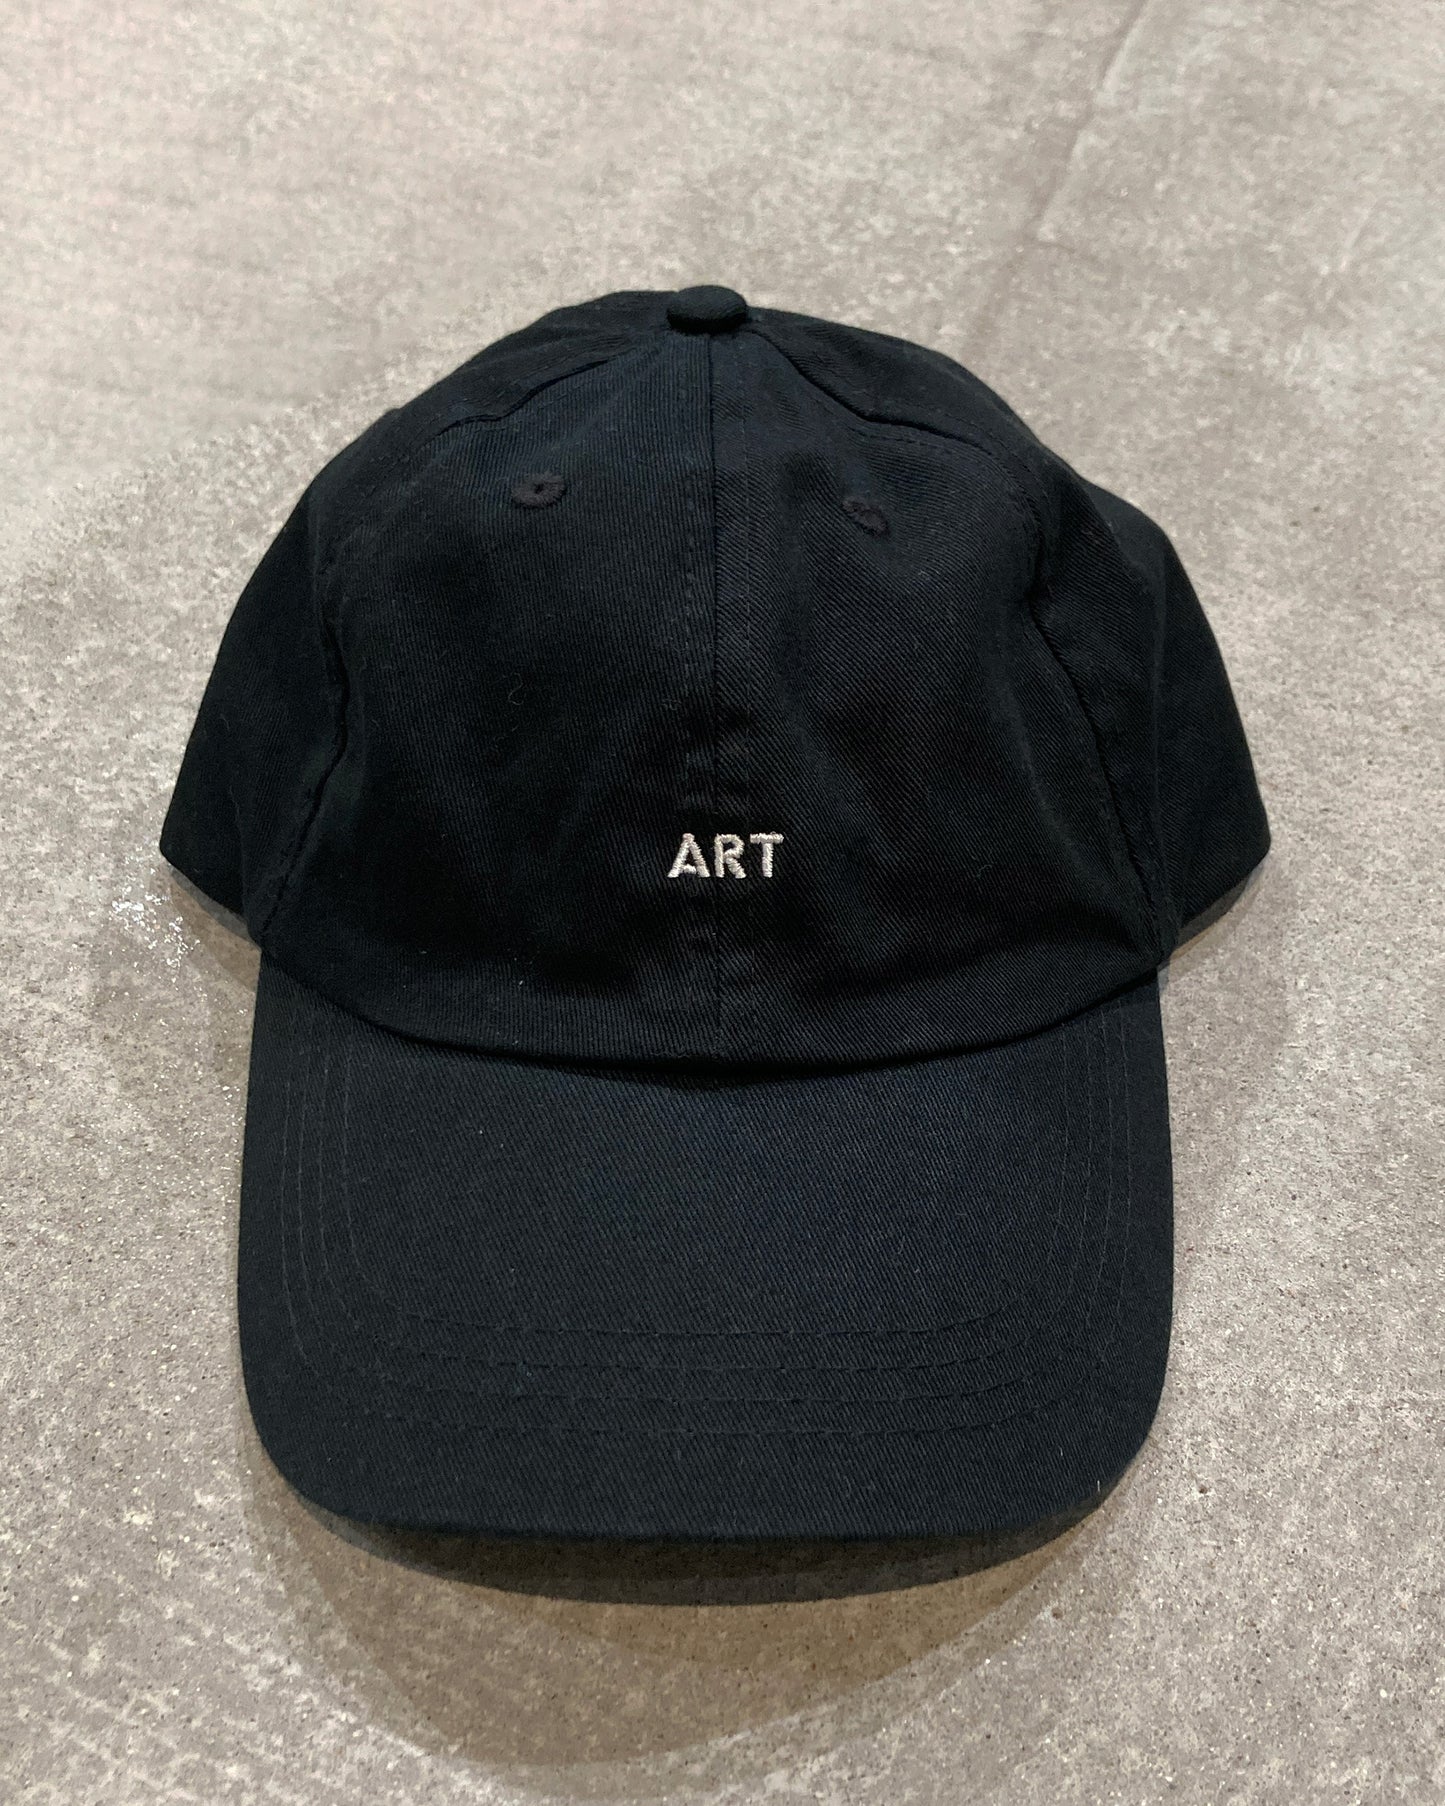 Art cap(BLACK/WHITE)